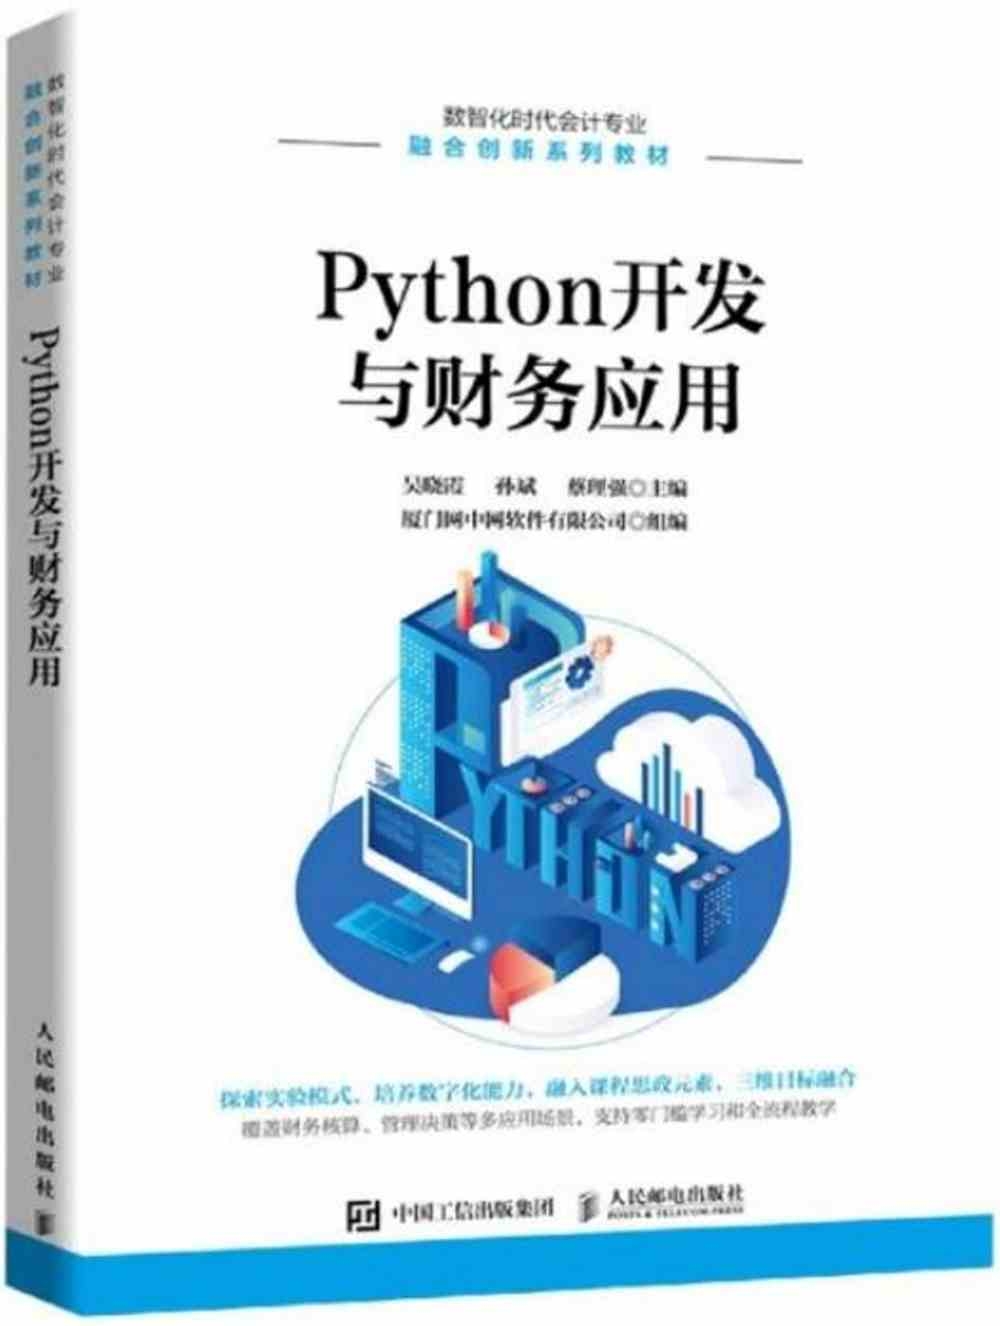 Python開發與財務應用